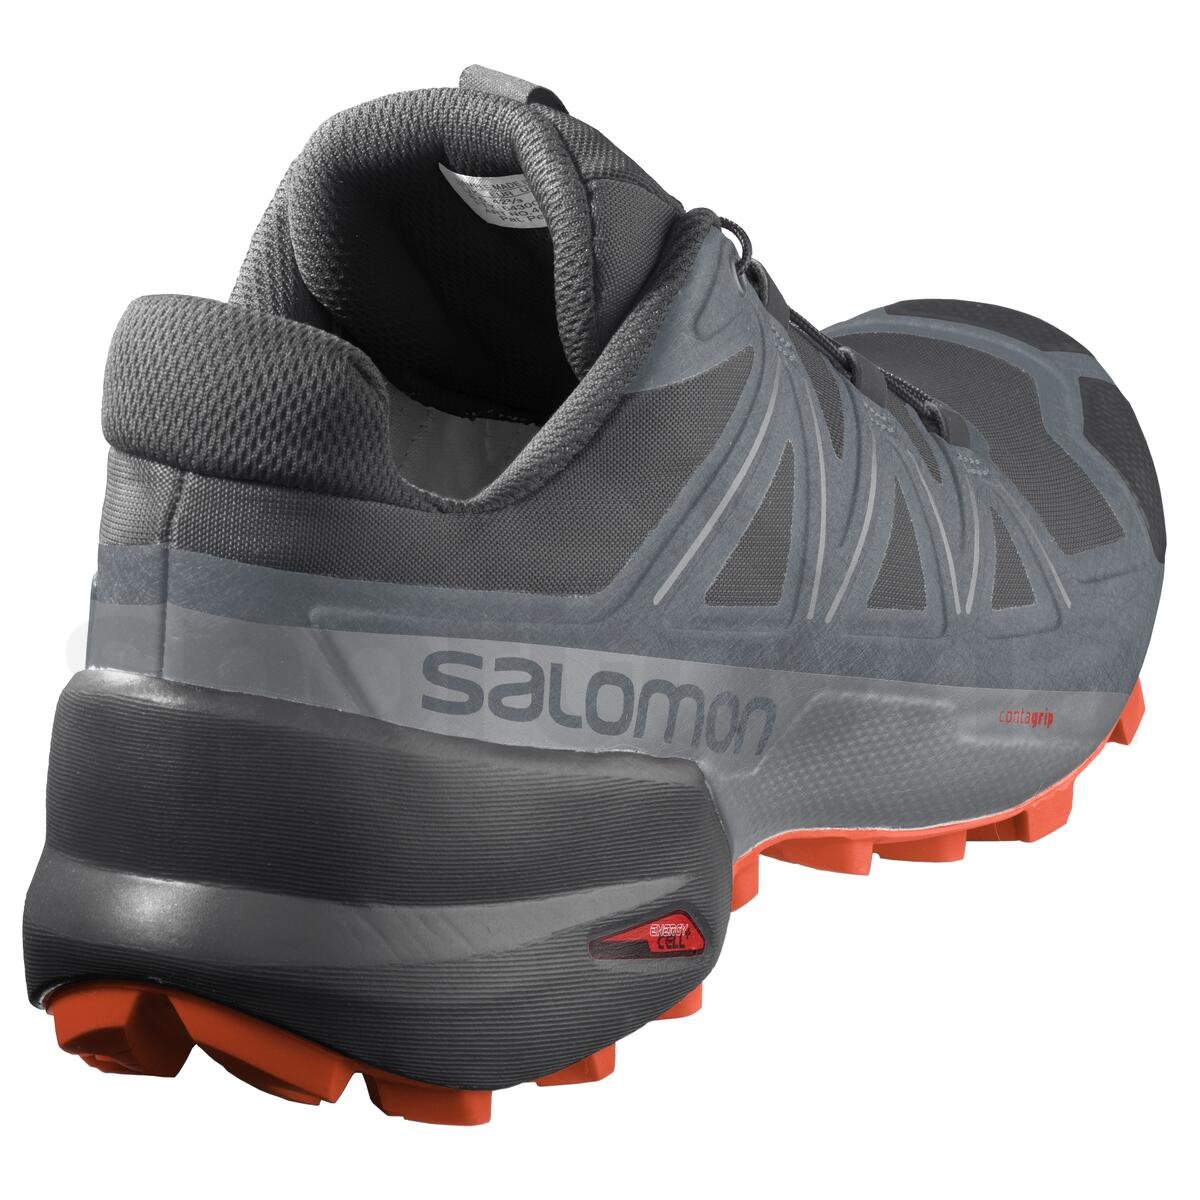 Obuv Salomon Speedcross 5 M - černá/šedá/oranžová